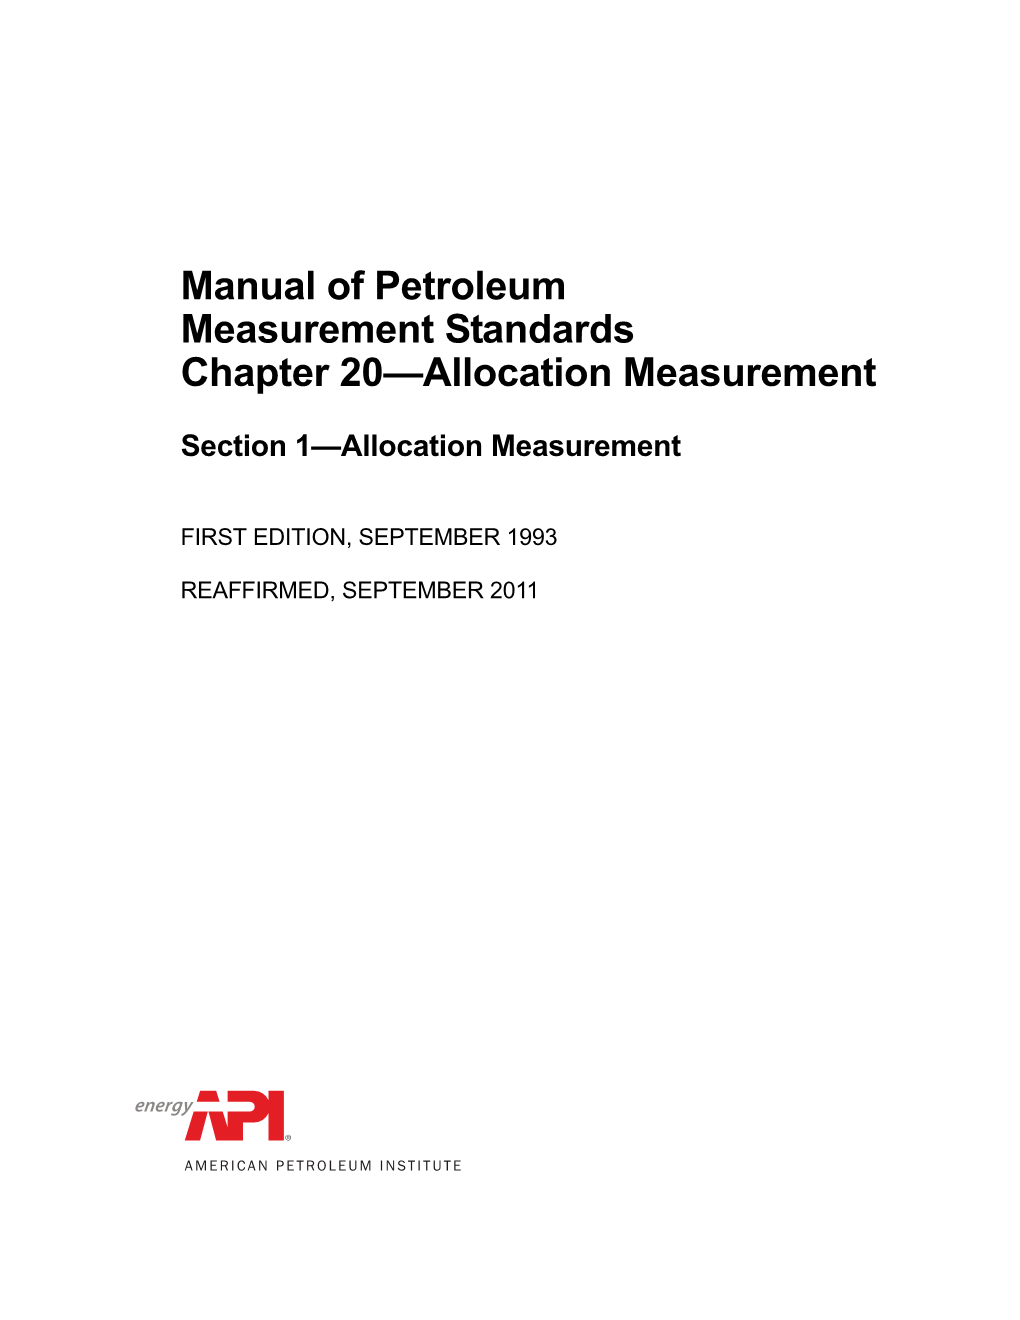 Manual of Petroleum Measurement Standards Chapter 20—Allocation Measurement